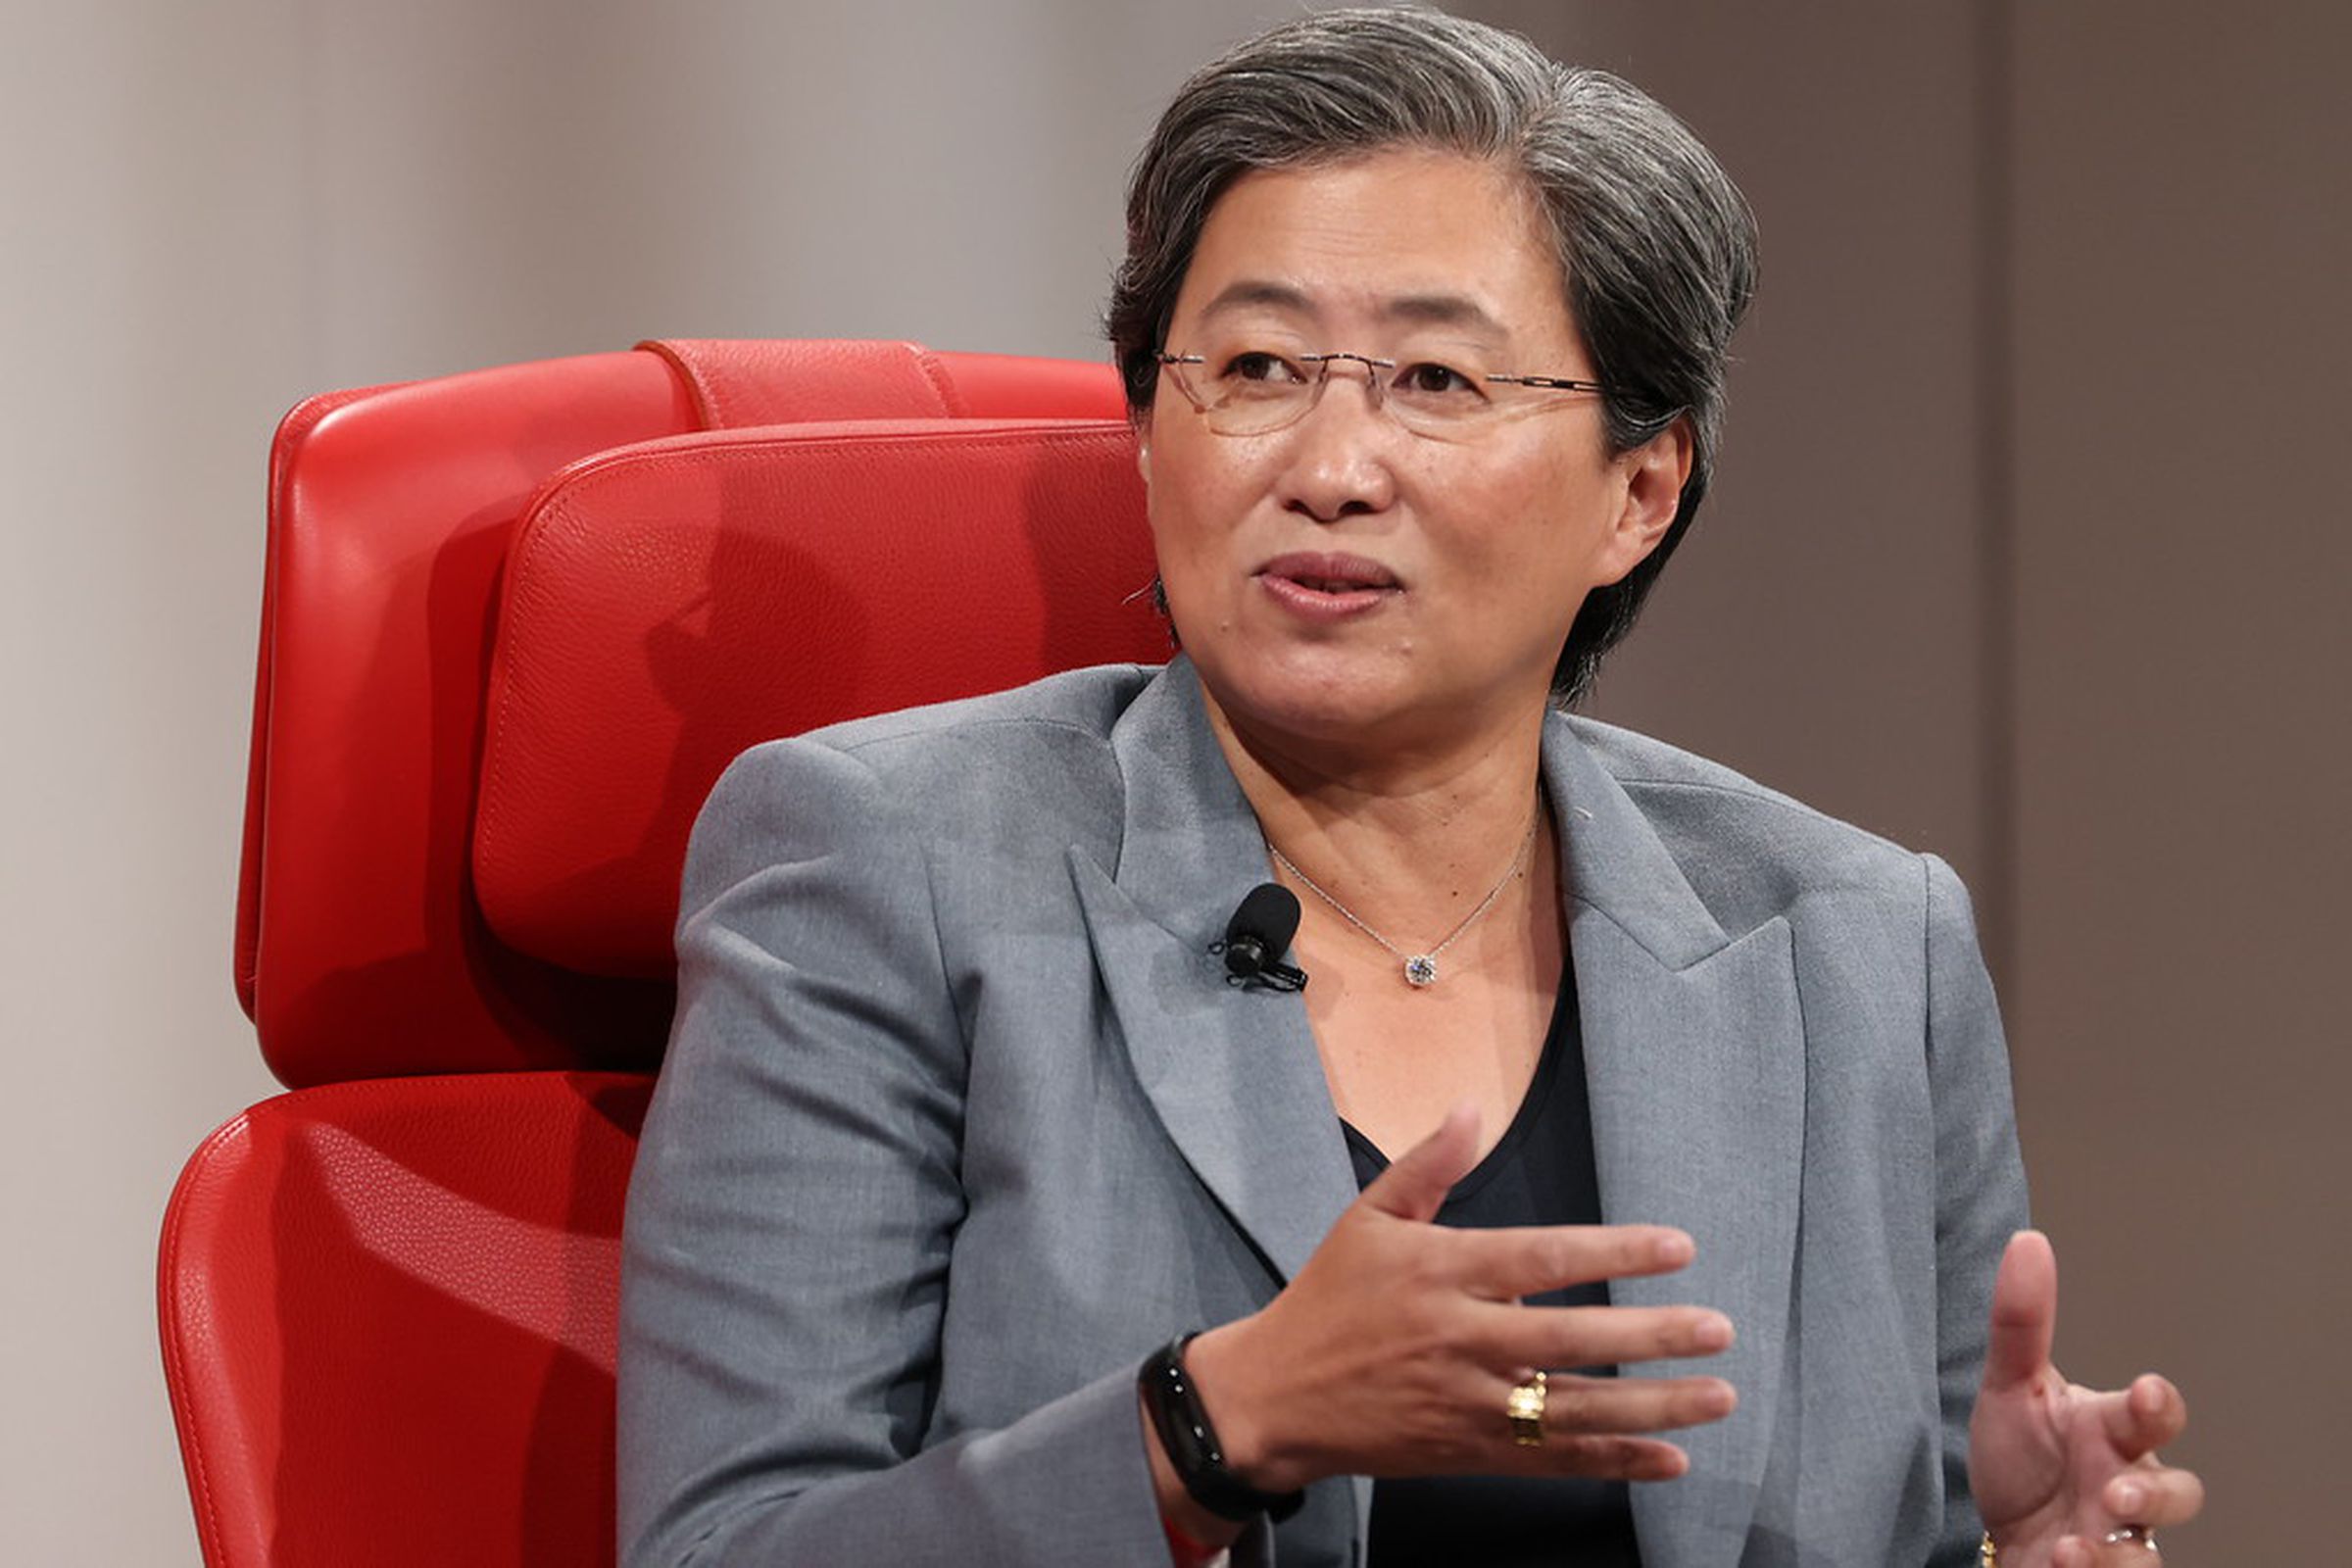 AMD CEO Lisa Su at Code Conference 2021.